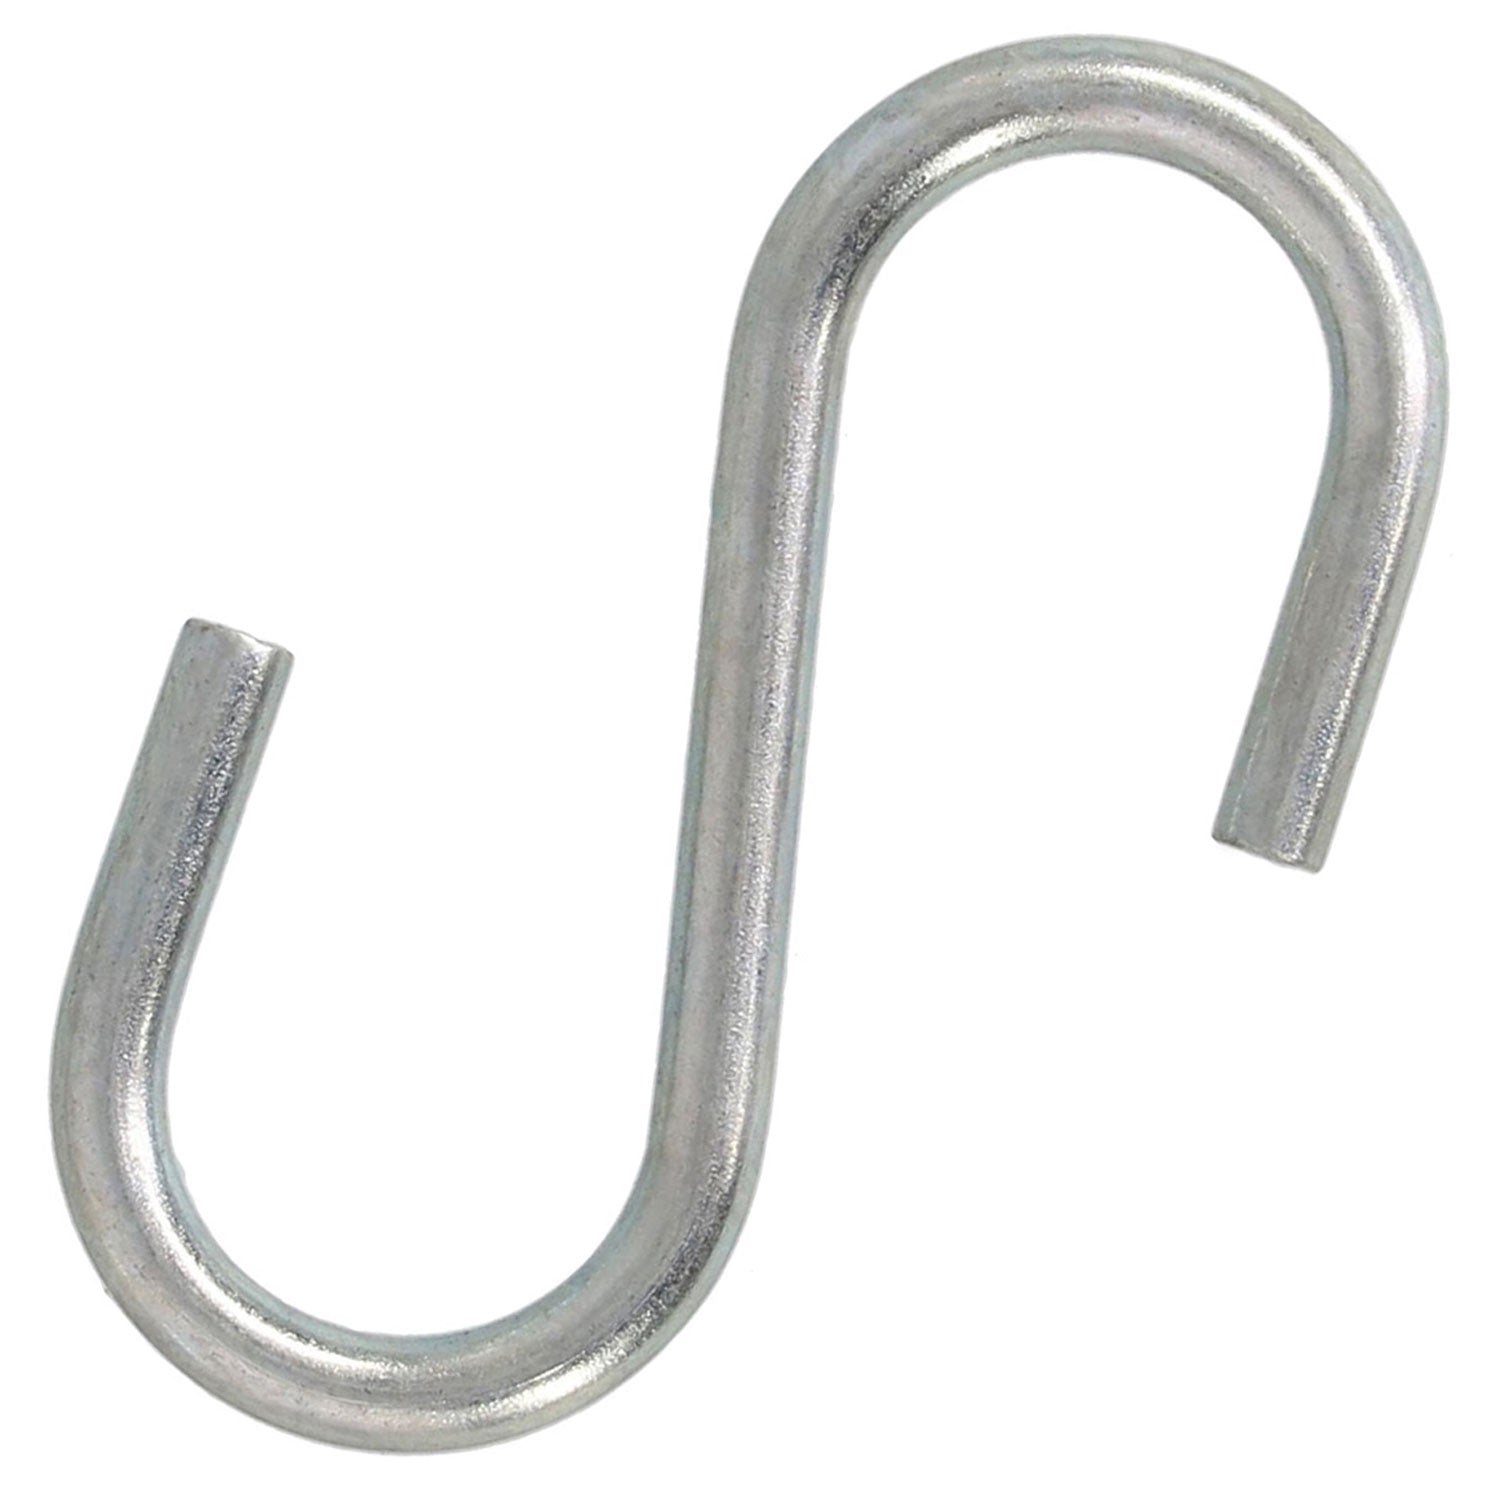 Zinc Plated Symmetric S-Hooks